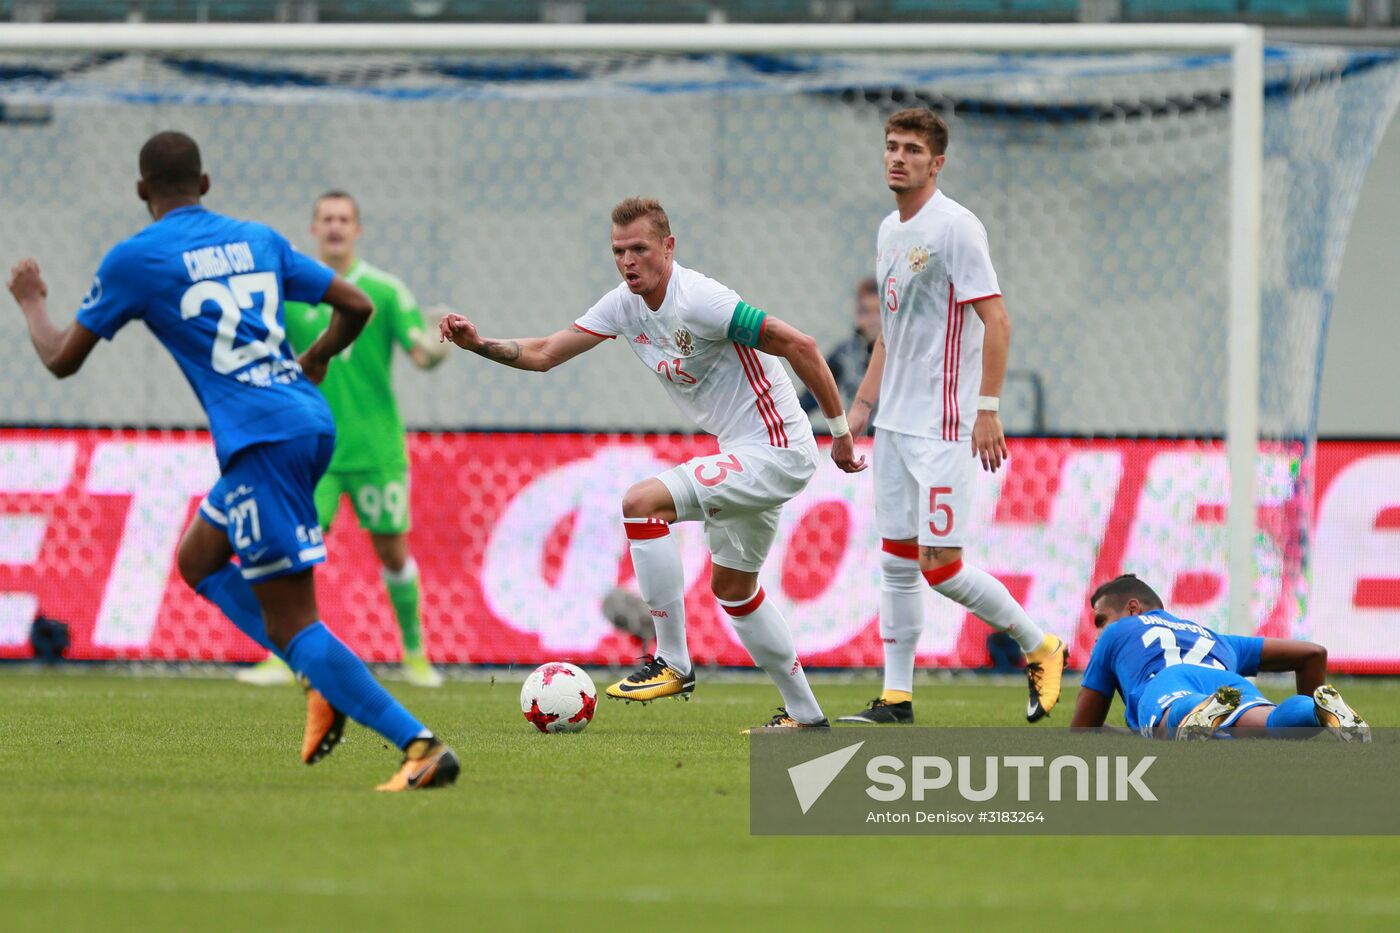 Russian national team vs. Dynamo Moscow friendly football match